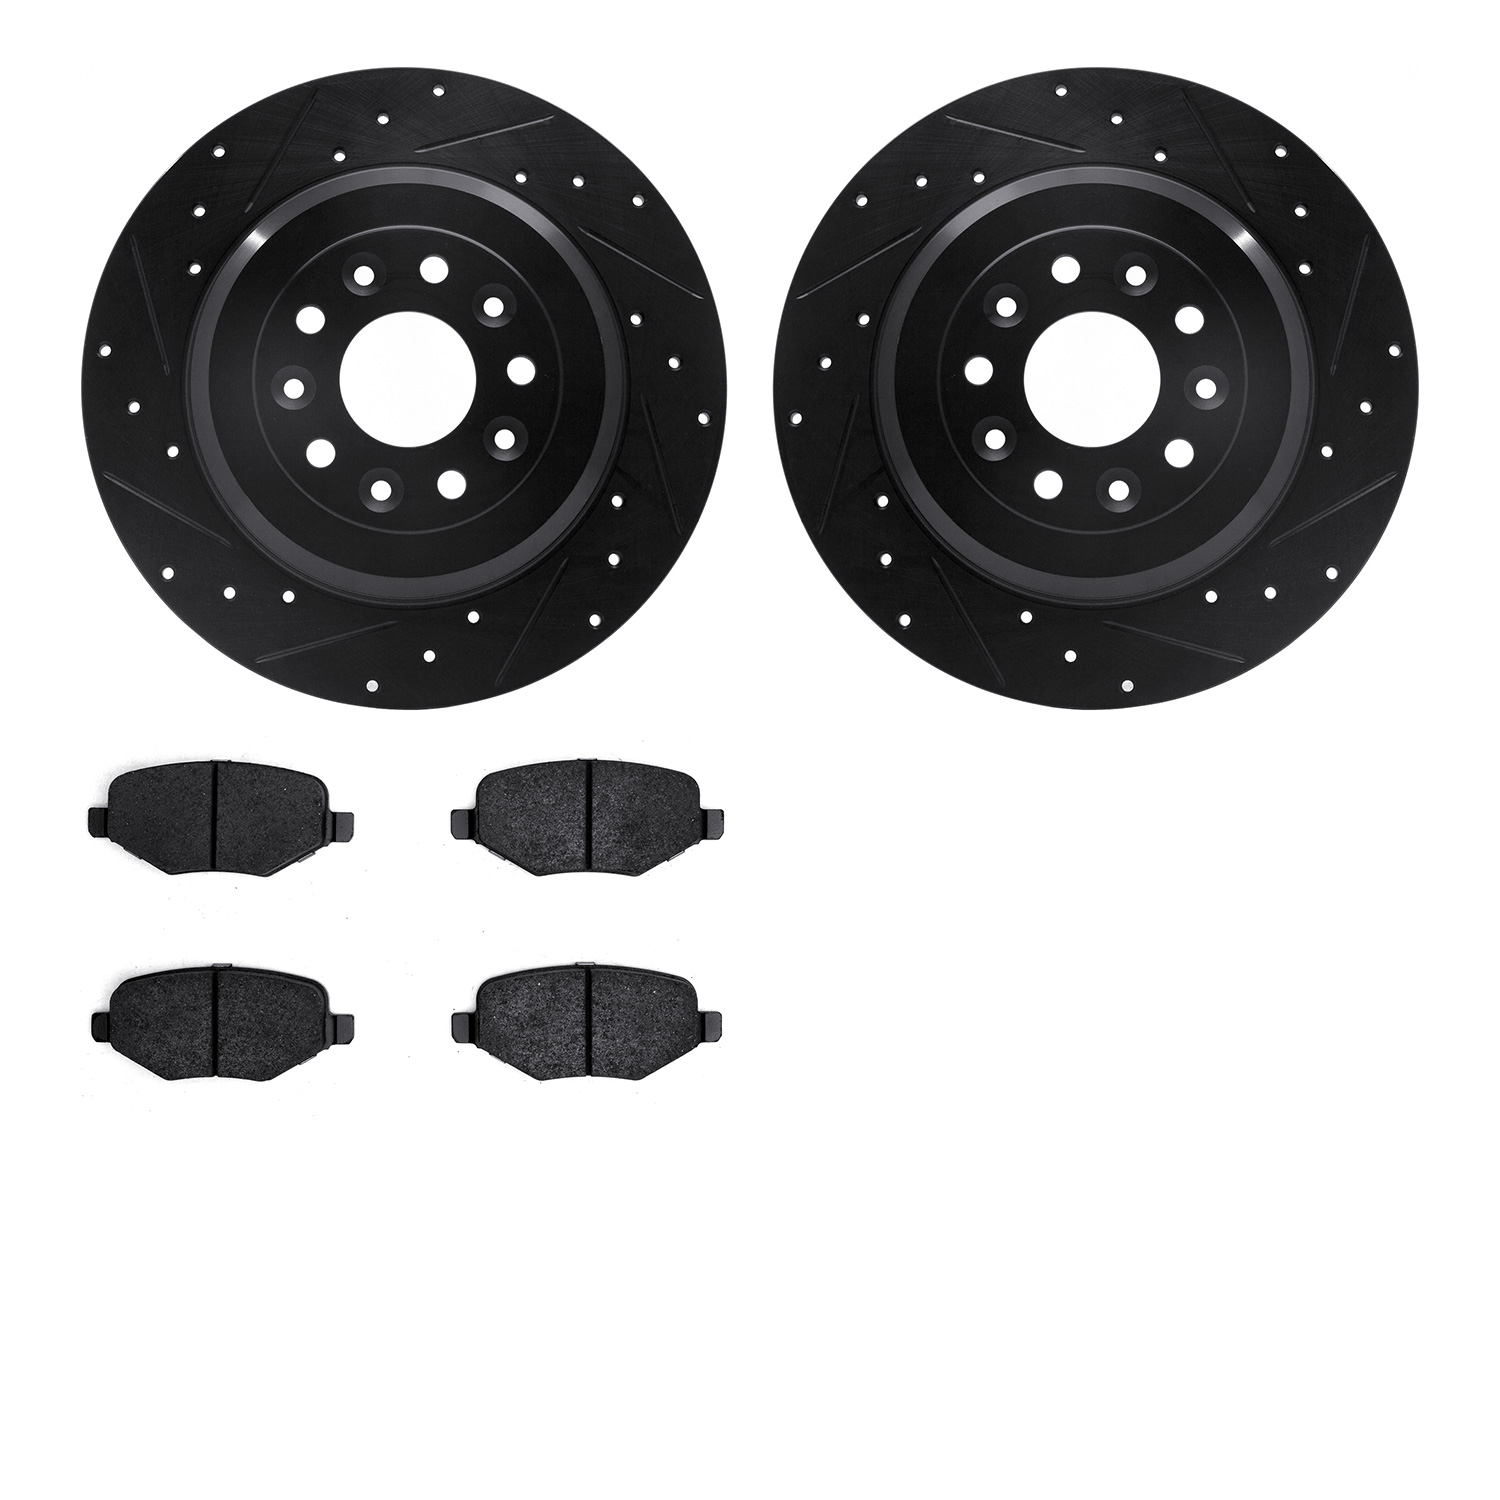 8302-54195 Drilled/Slotted Brake Rotors with 3000-Series Ceramic Brake Pads Kit [Black], 2009-2019 Ford/Lincoln/Mercury/Mazda, P